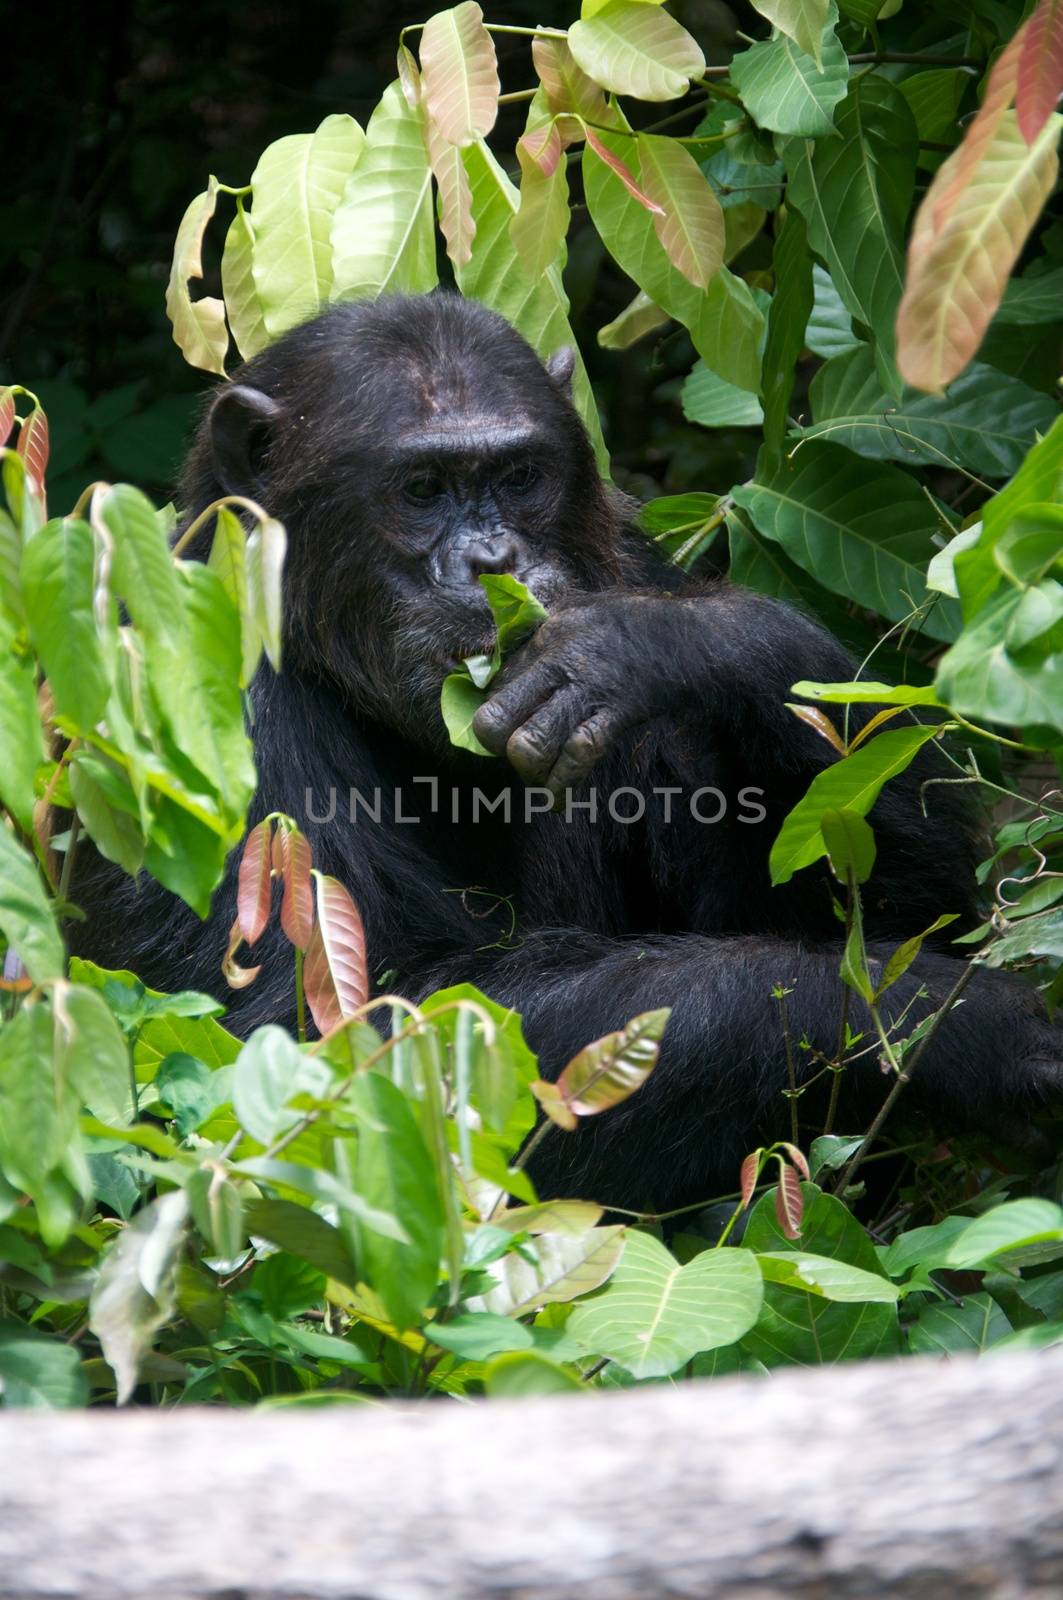 Chimpanzee in the wild by moizhusein